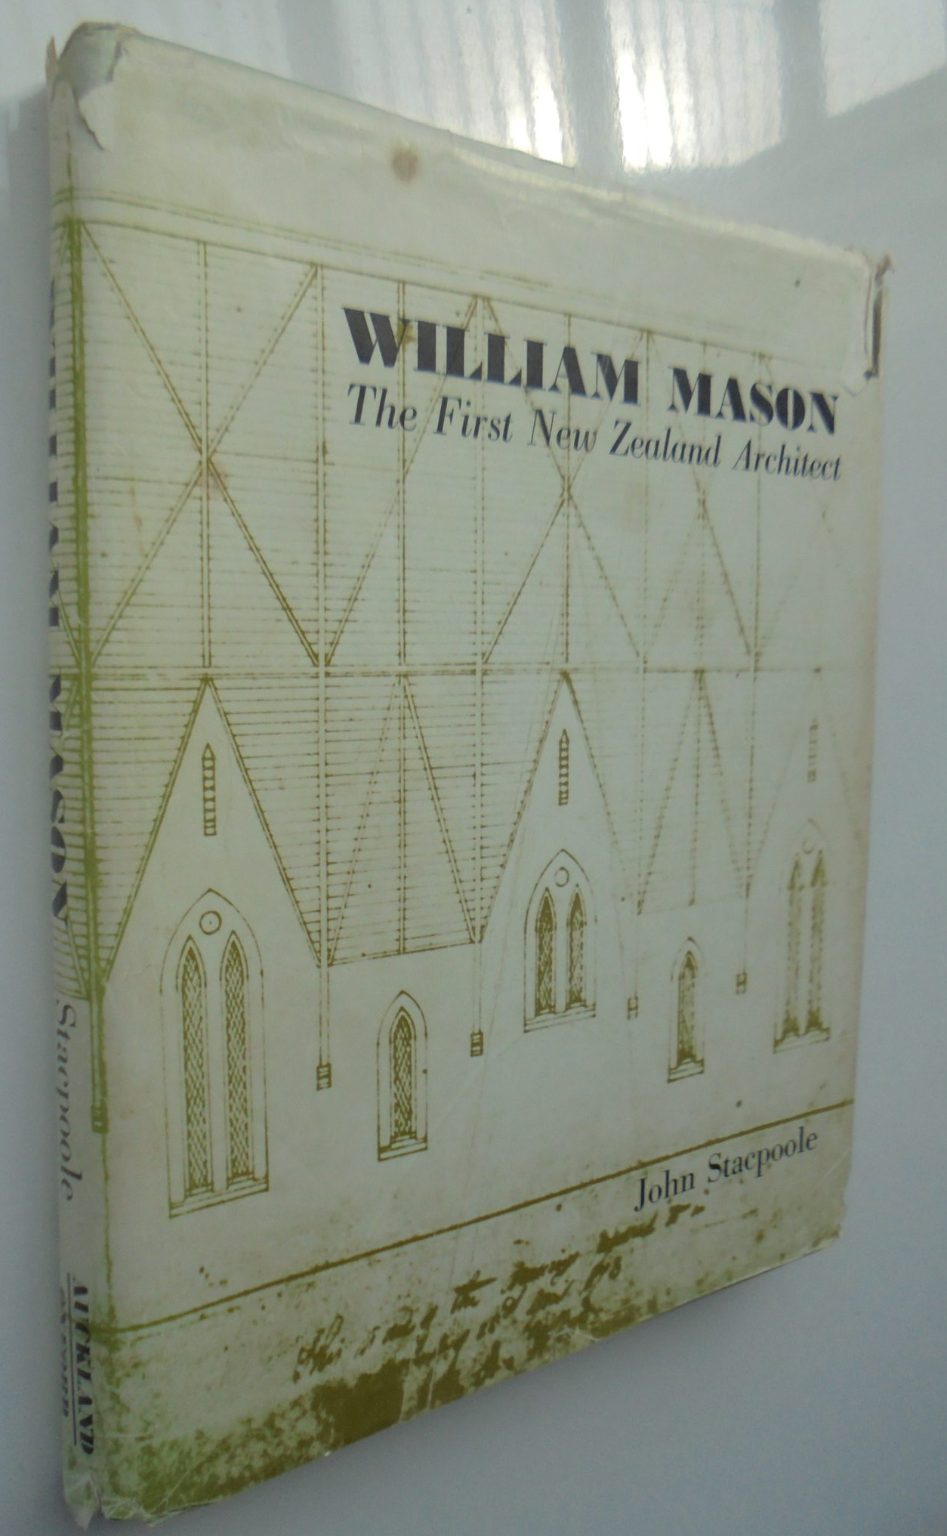 William Mason: The First New Zealand Architect. By John Stacpoole